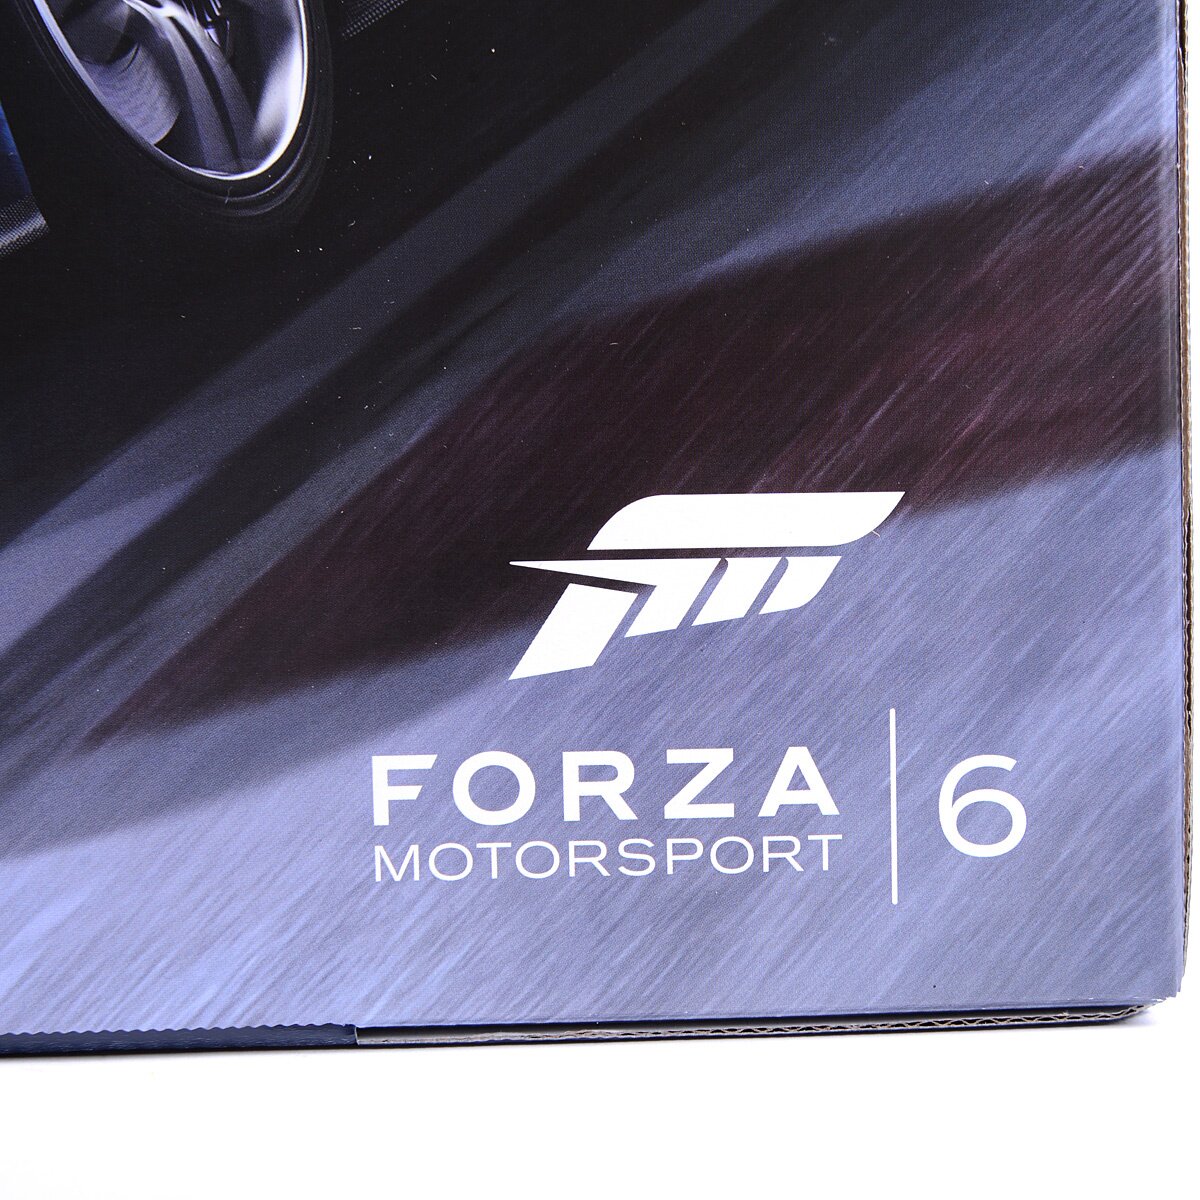 Buy Forza Motorsport 6: Apex - Microsoft Store